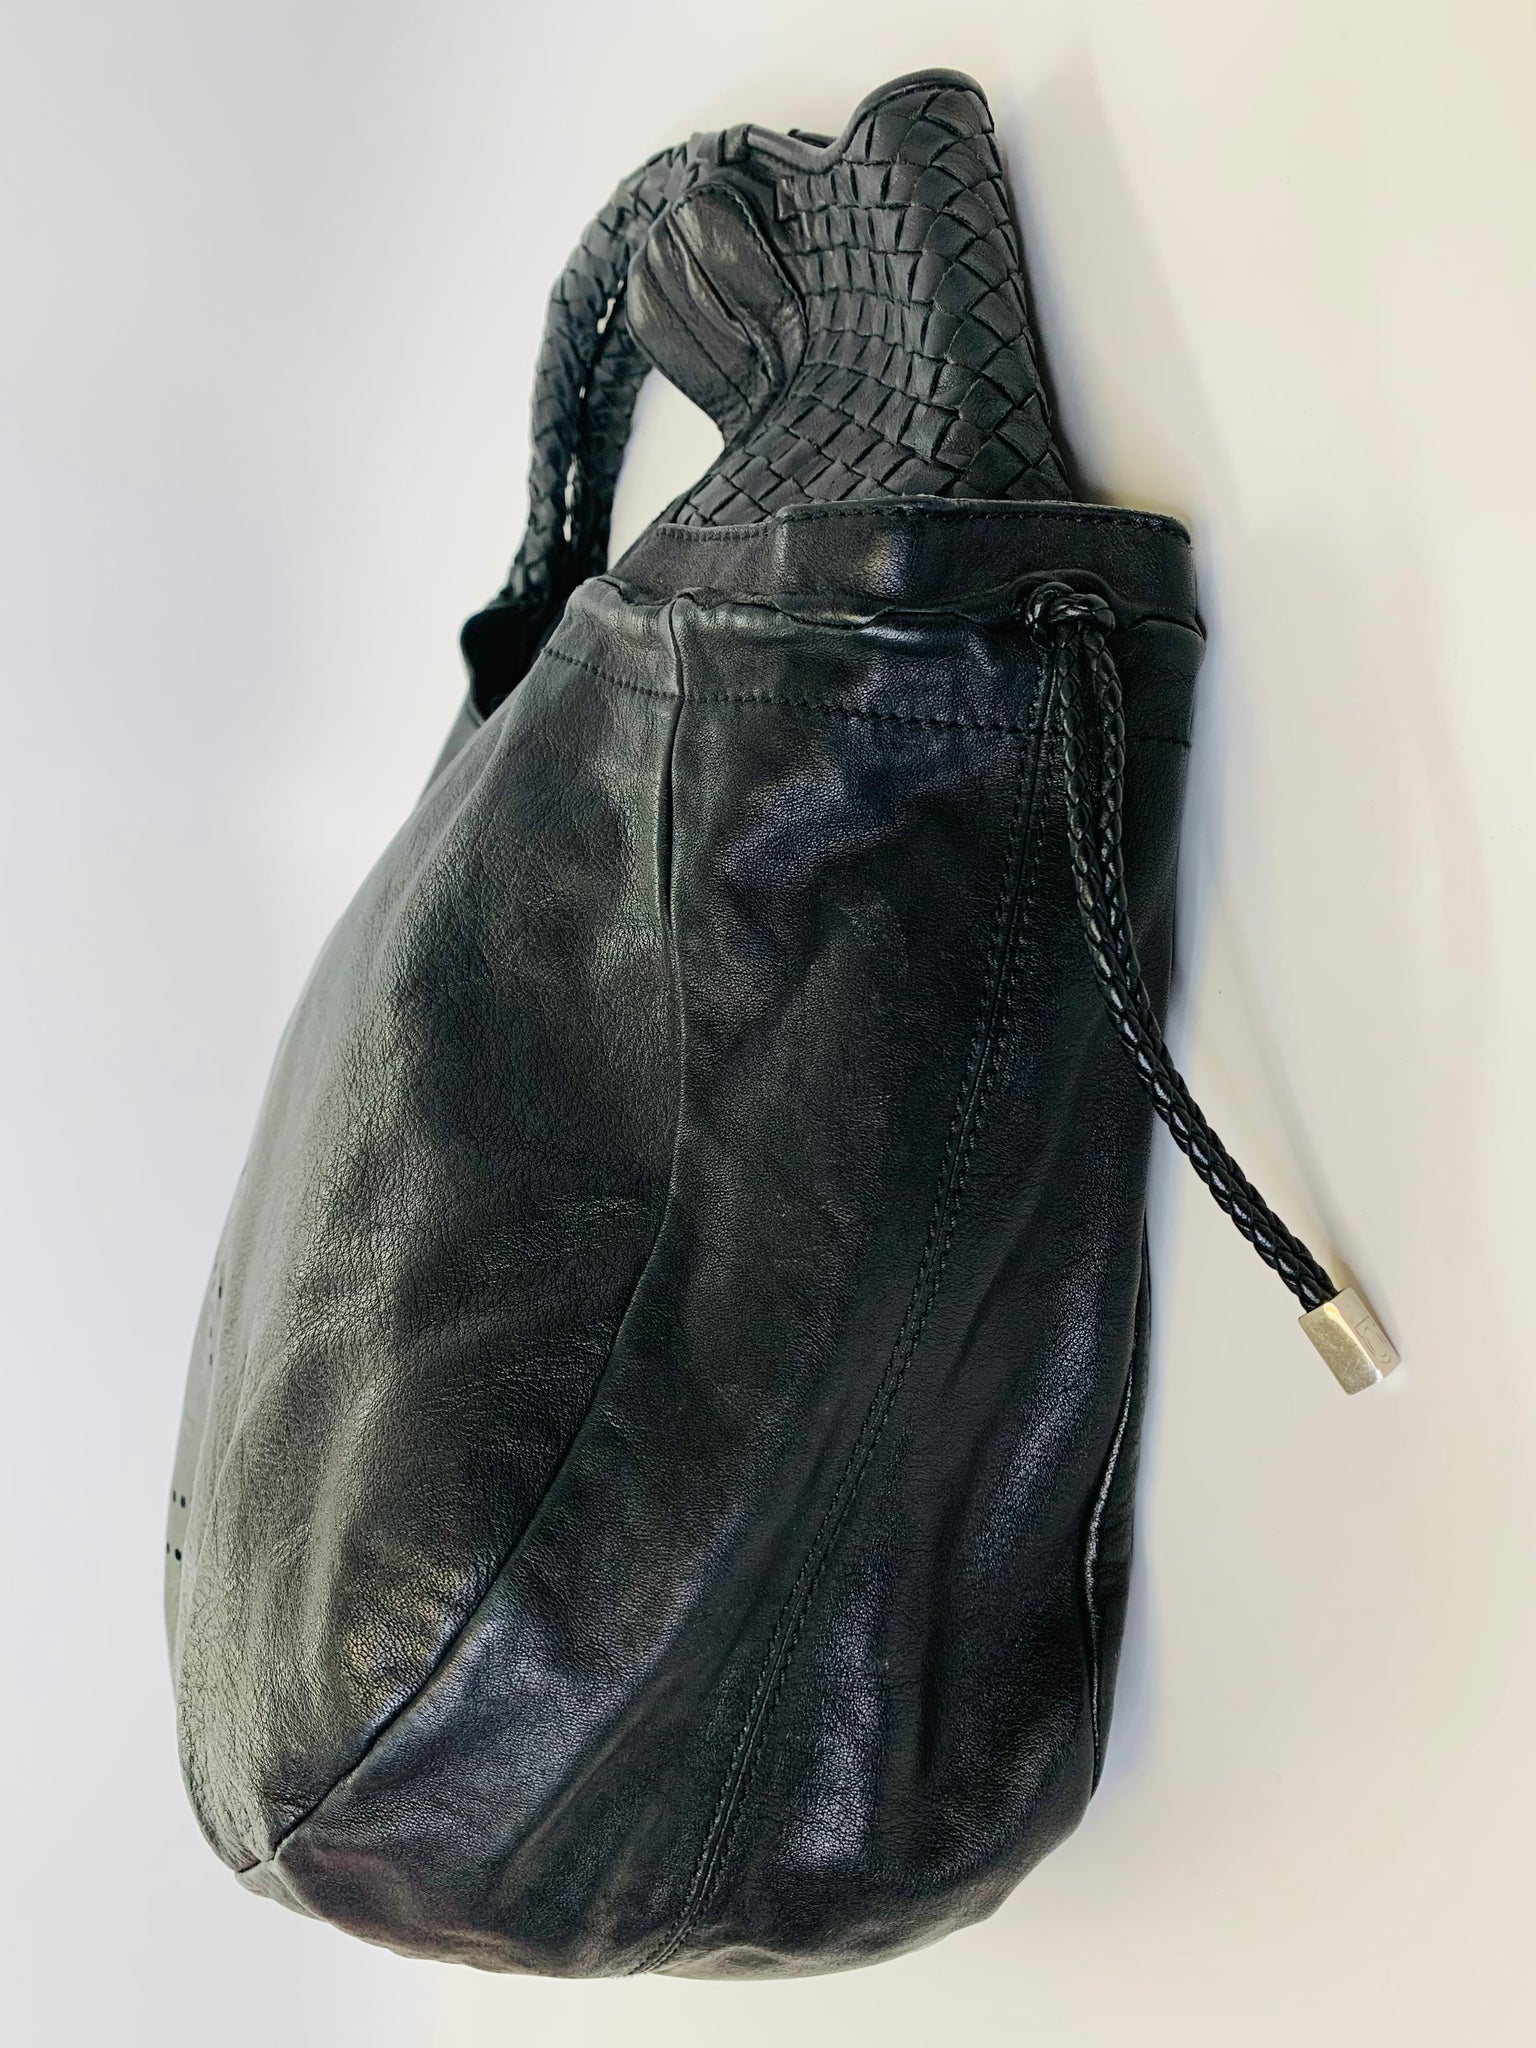 Ferragamo Small Leather Hobo Shoulder Bag